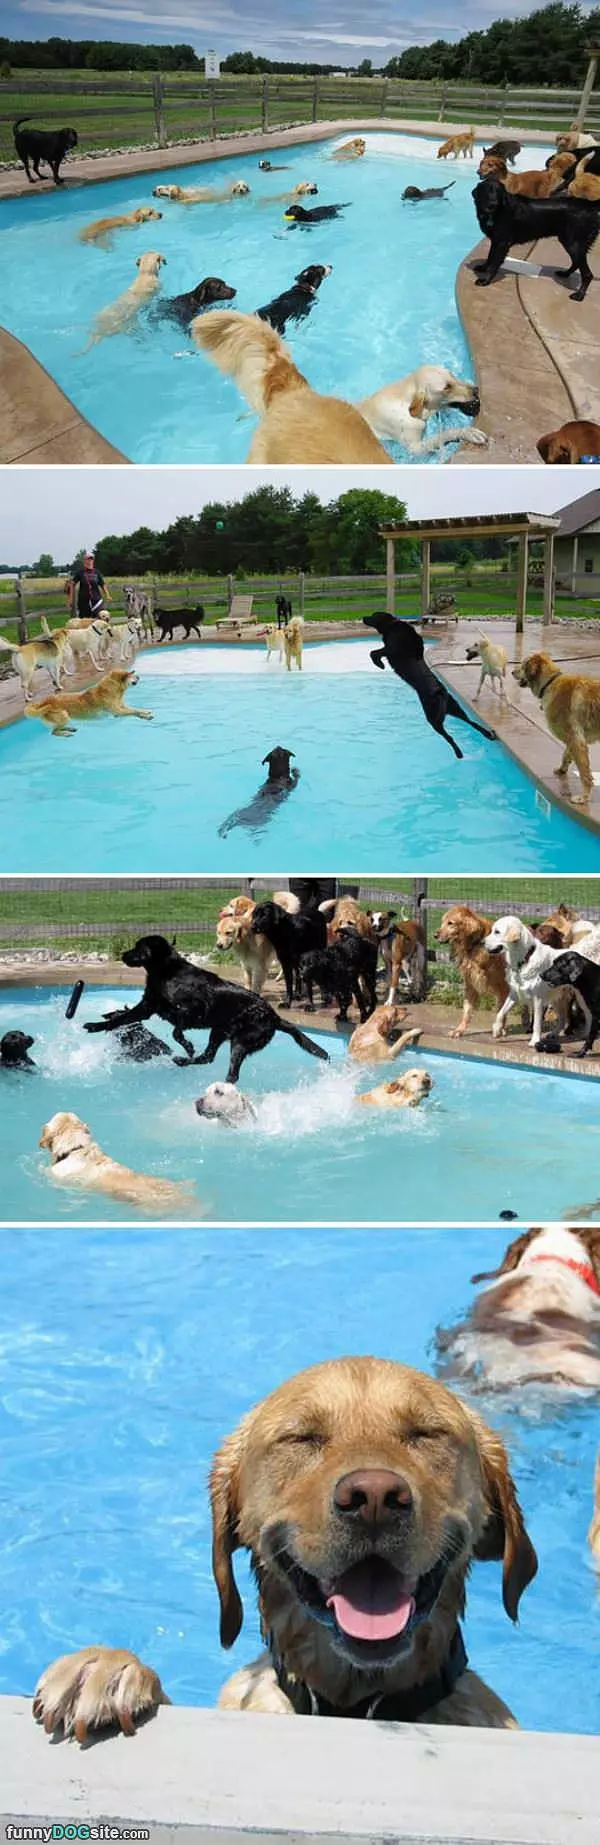 The Dog Pool